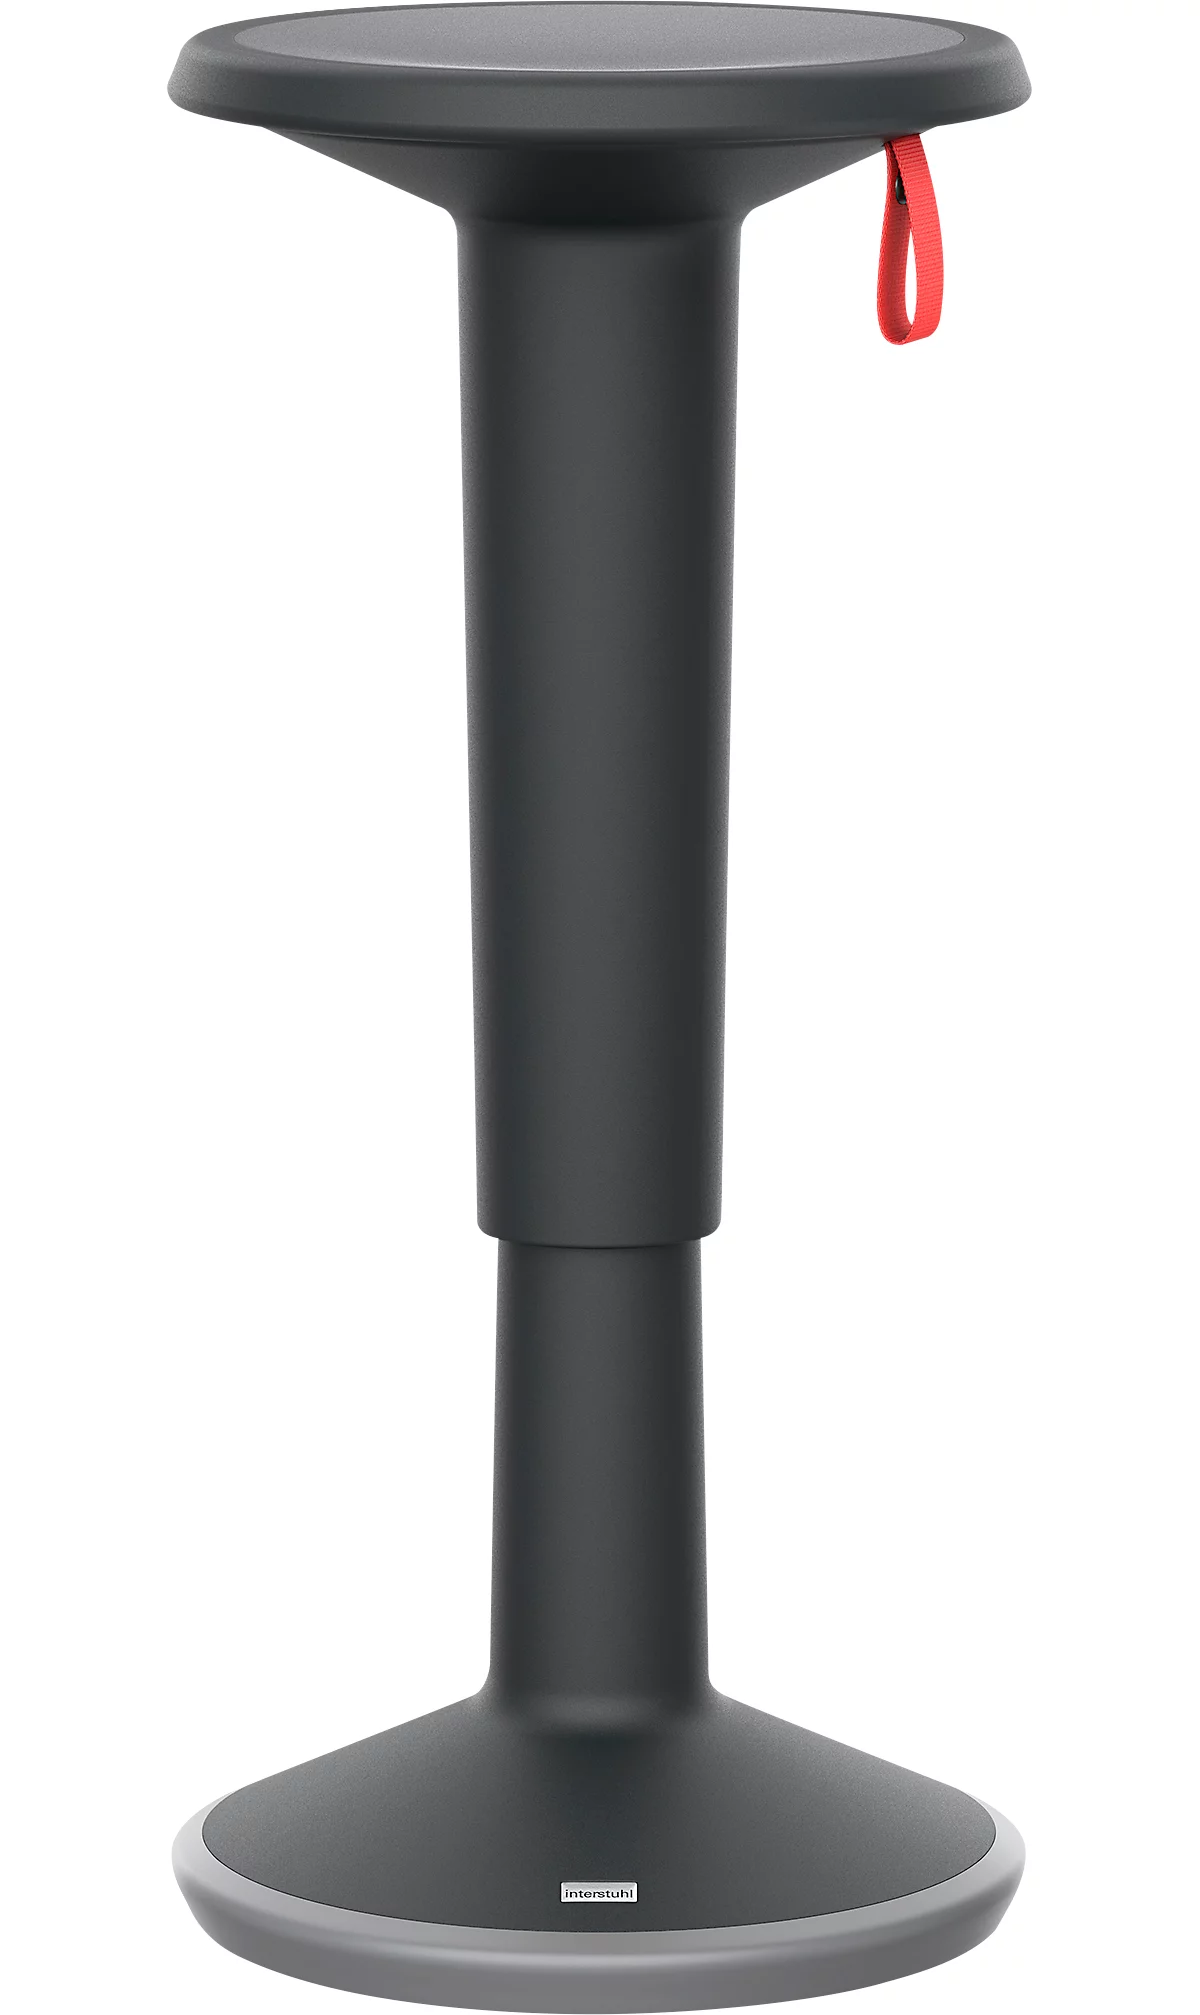 Taburete StandUP regulable en altura, Ø 330 x H 590 - 845 mm, negro